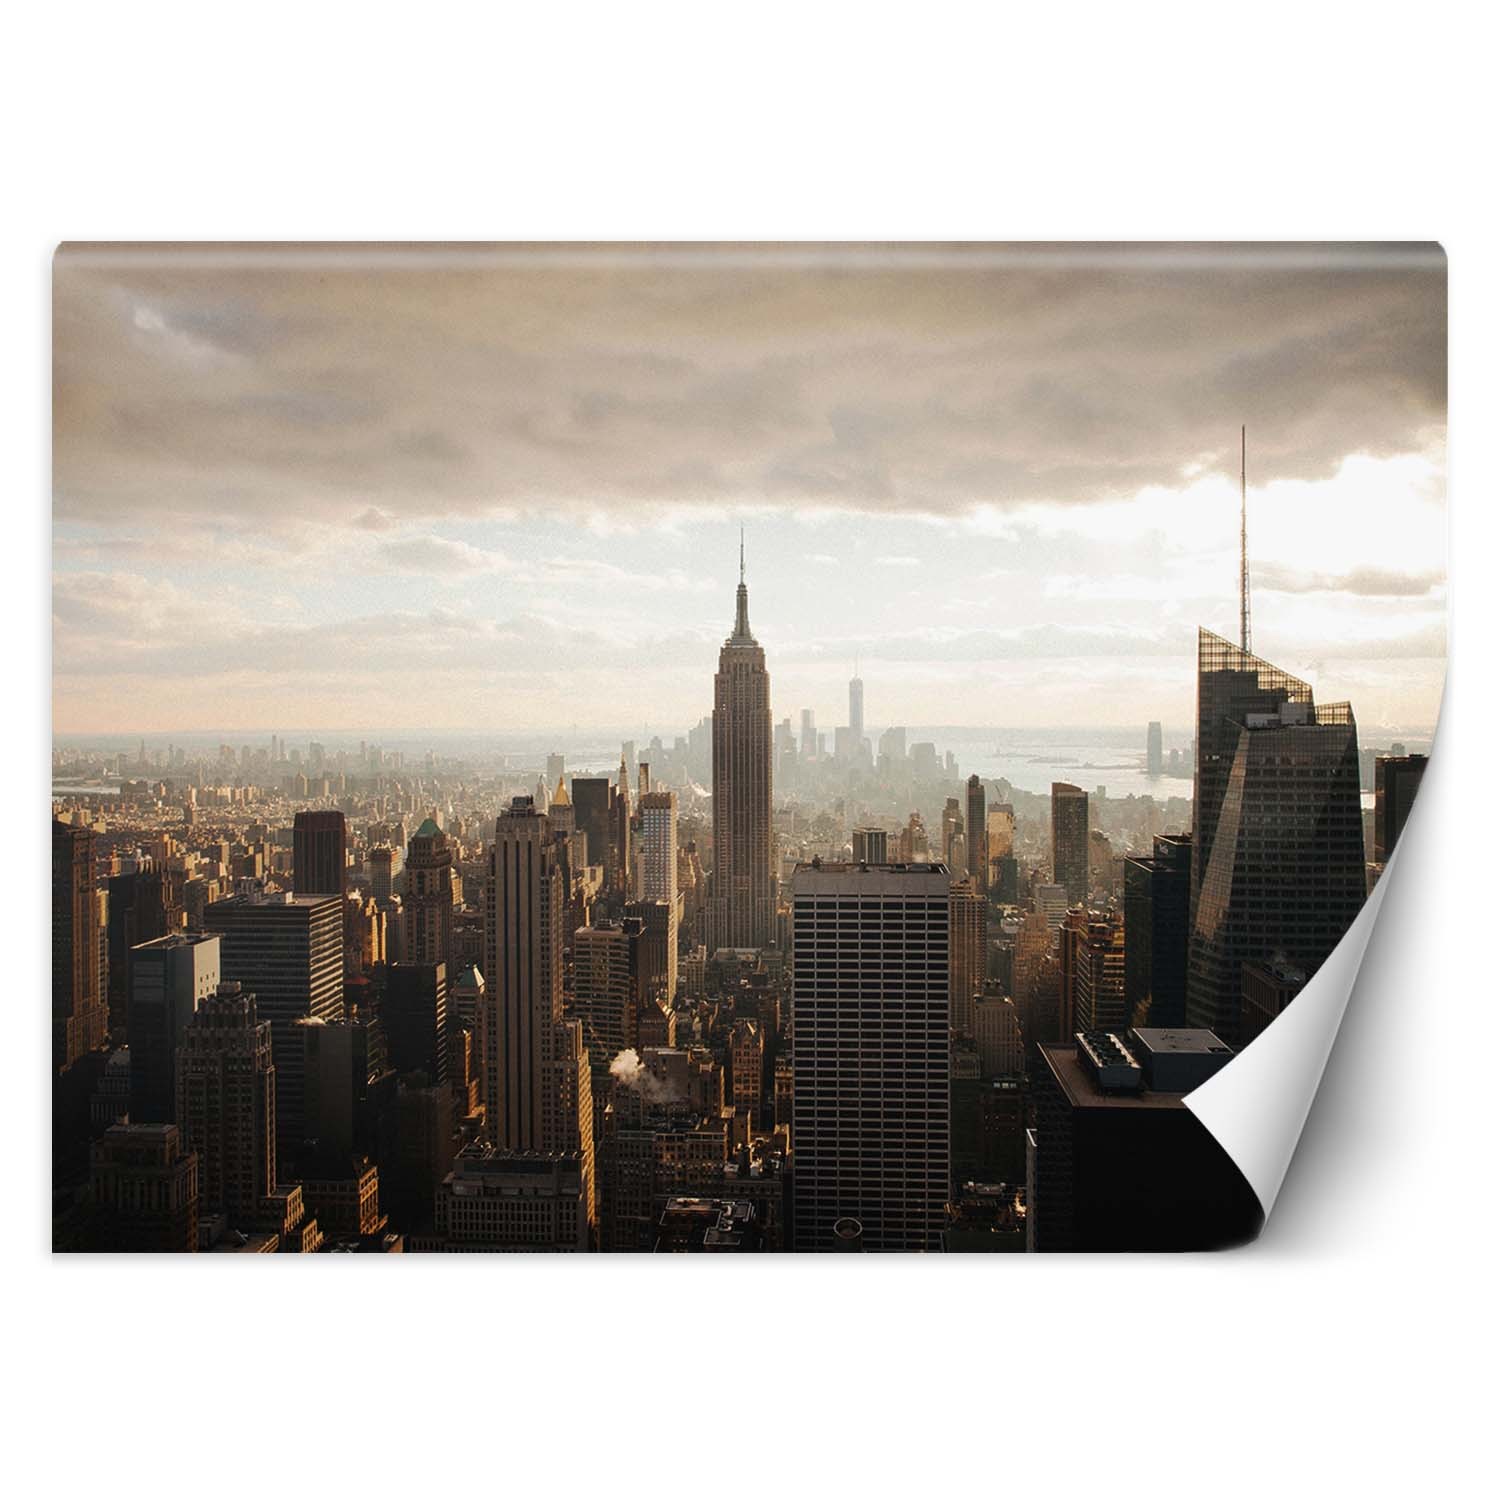 Trend24 – Behang – New York – Manhattan – Vliesbehang – Fotobehang – Behang Woonkamer – 350x245x2 cm – Incl. behanglijm